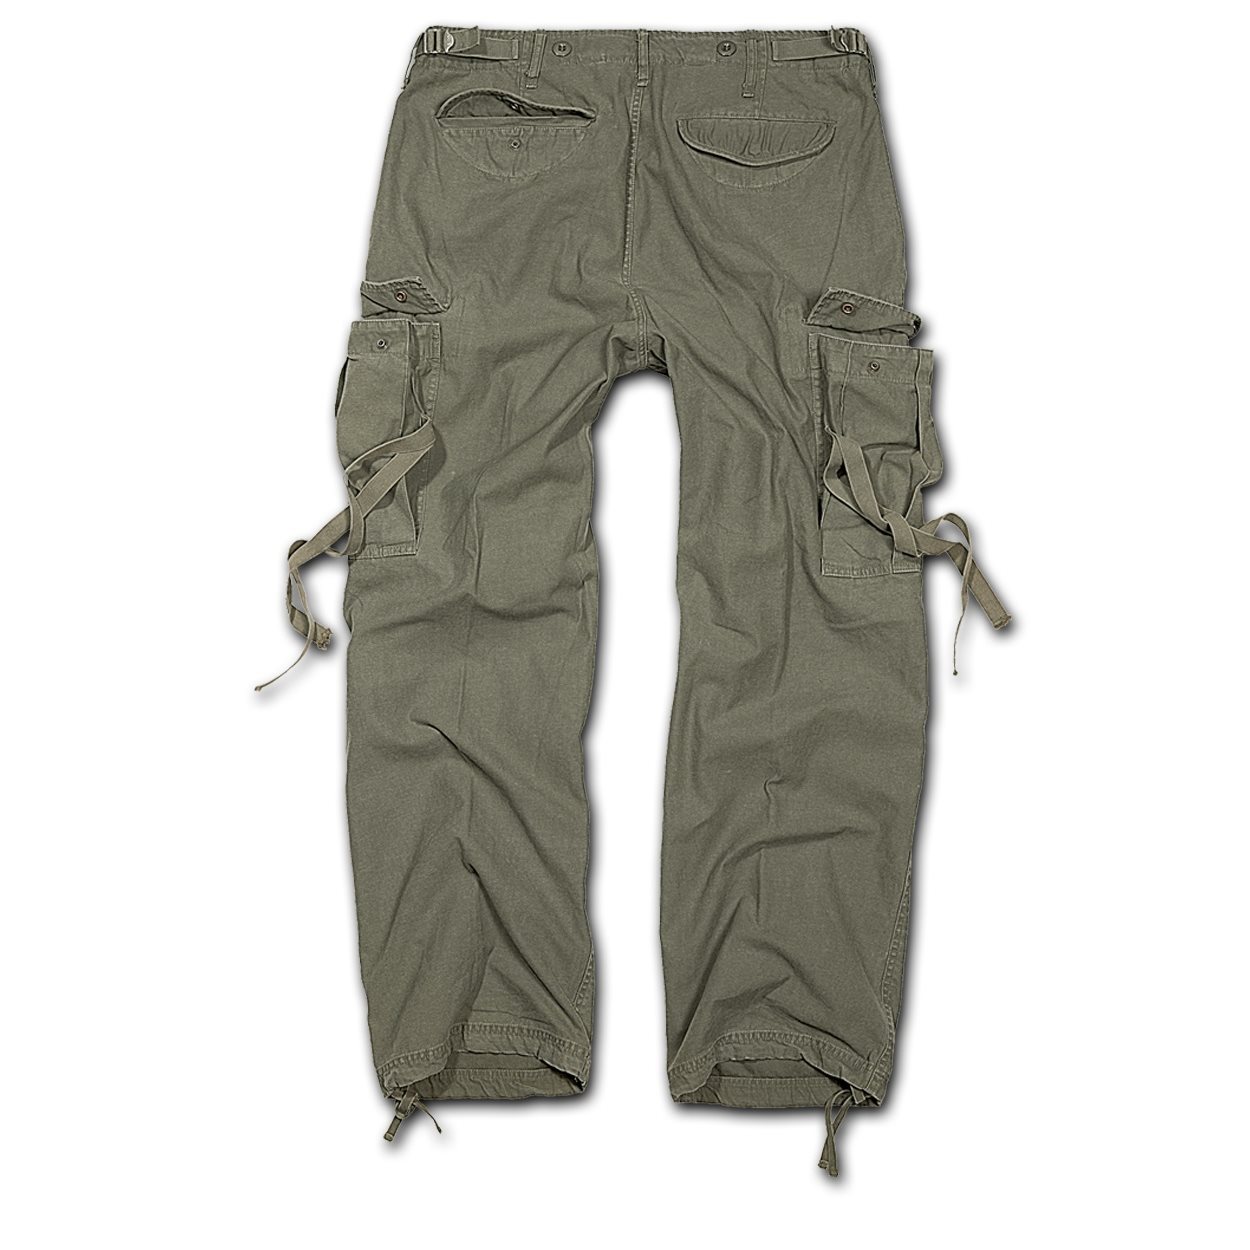 BRANDIT M65 trousers vintage OLIVE | Army surplus MILITARY RANGE